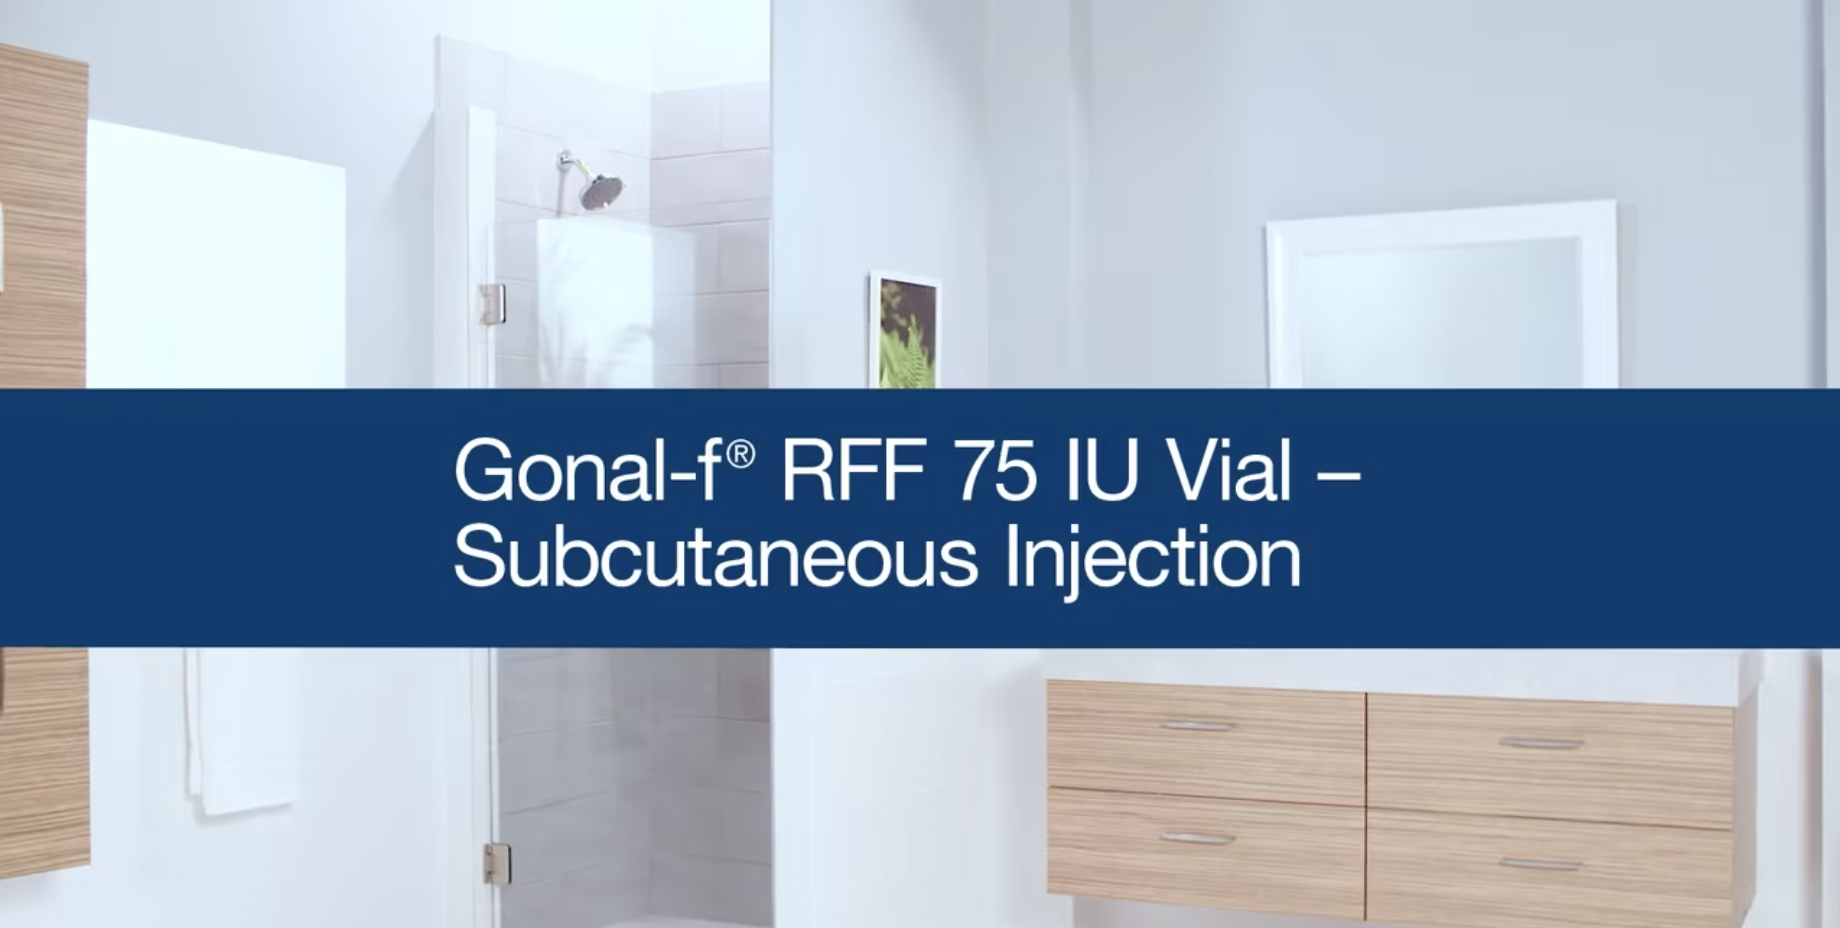 Gonal-f RFF 75 IU Vial 